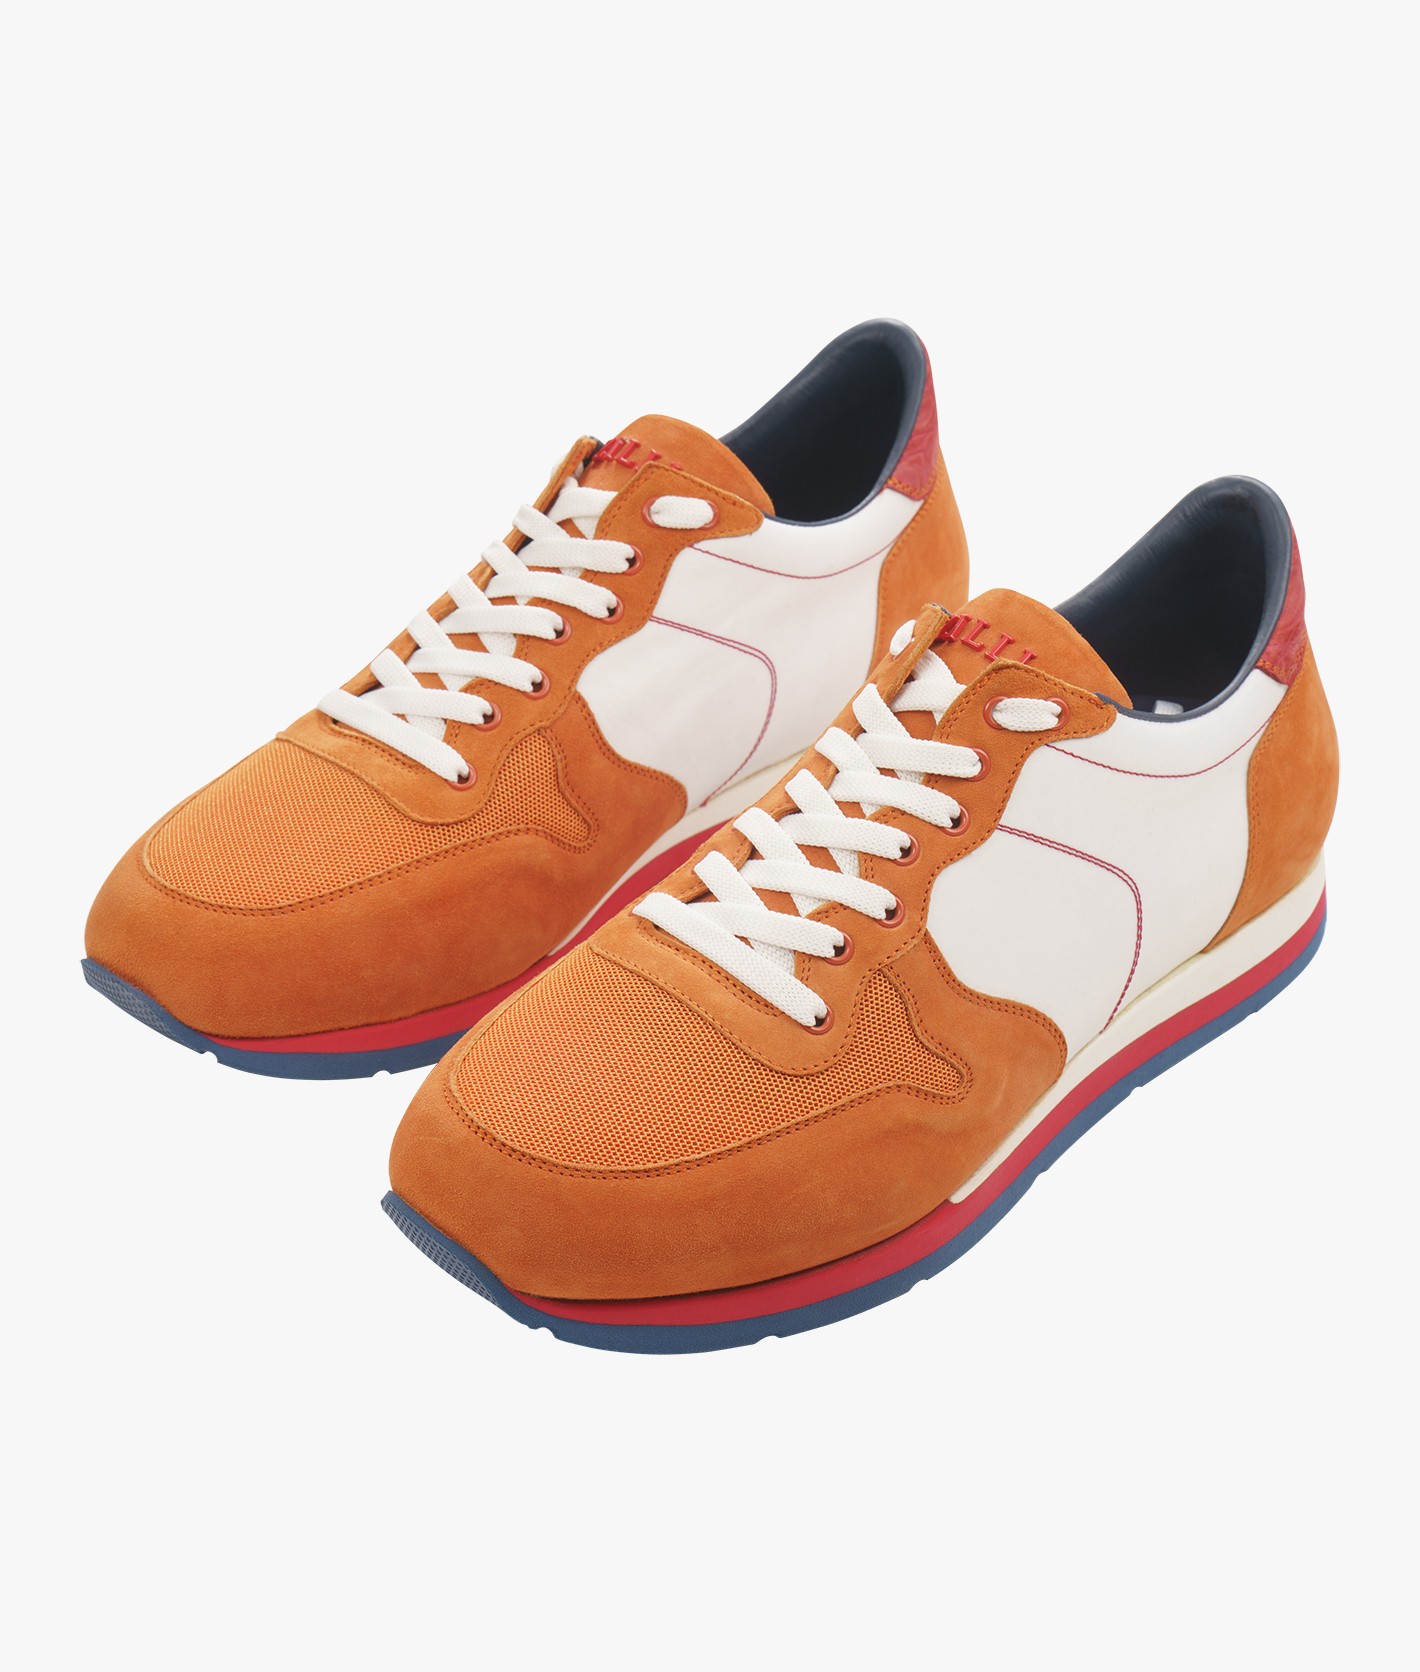 White and orange run sneakers